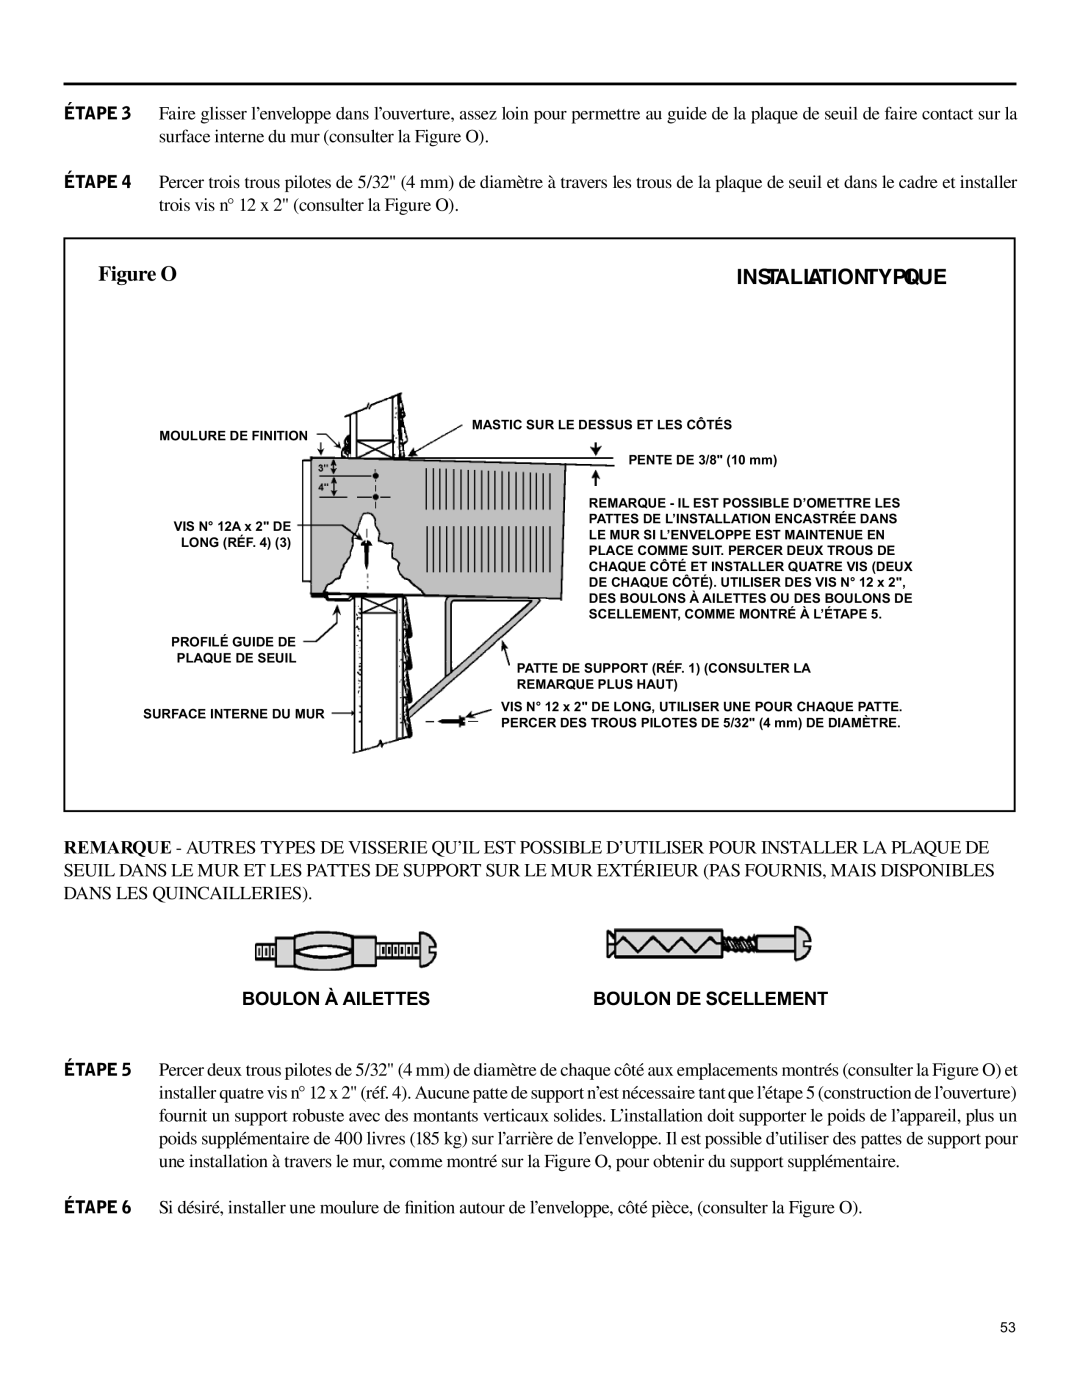 Friedrich SH15 operation manual Installationtypique, Boulon À Ailettes 